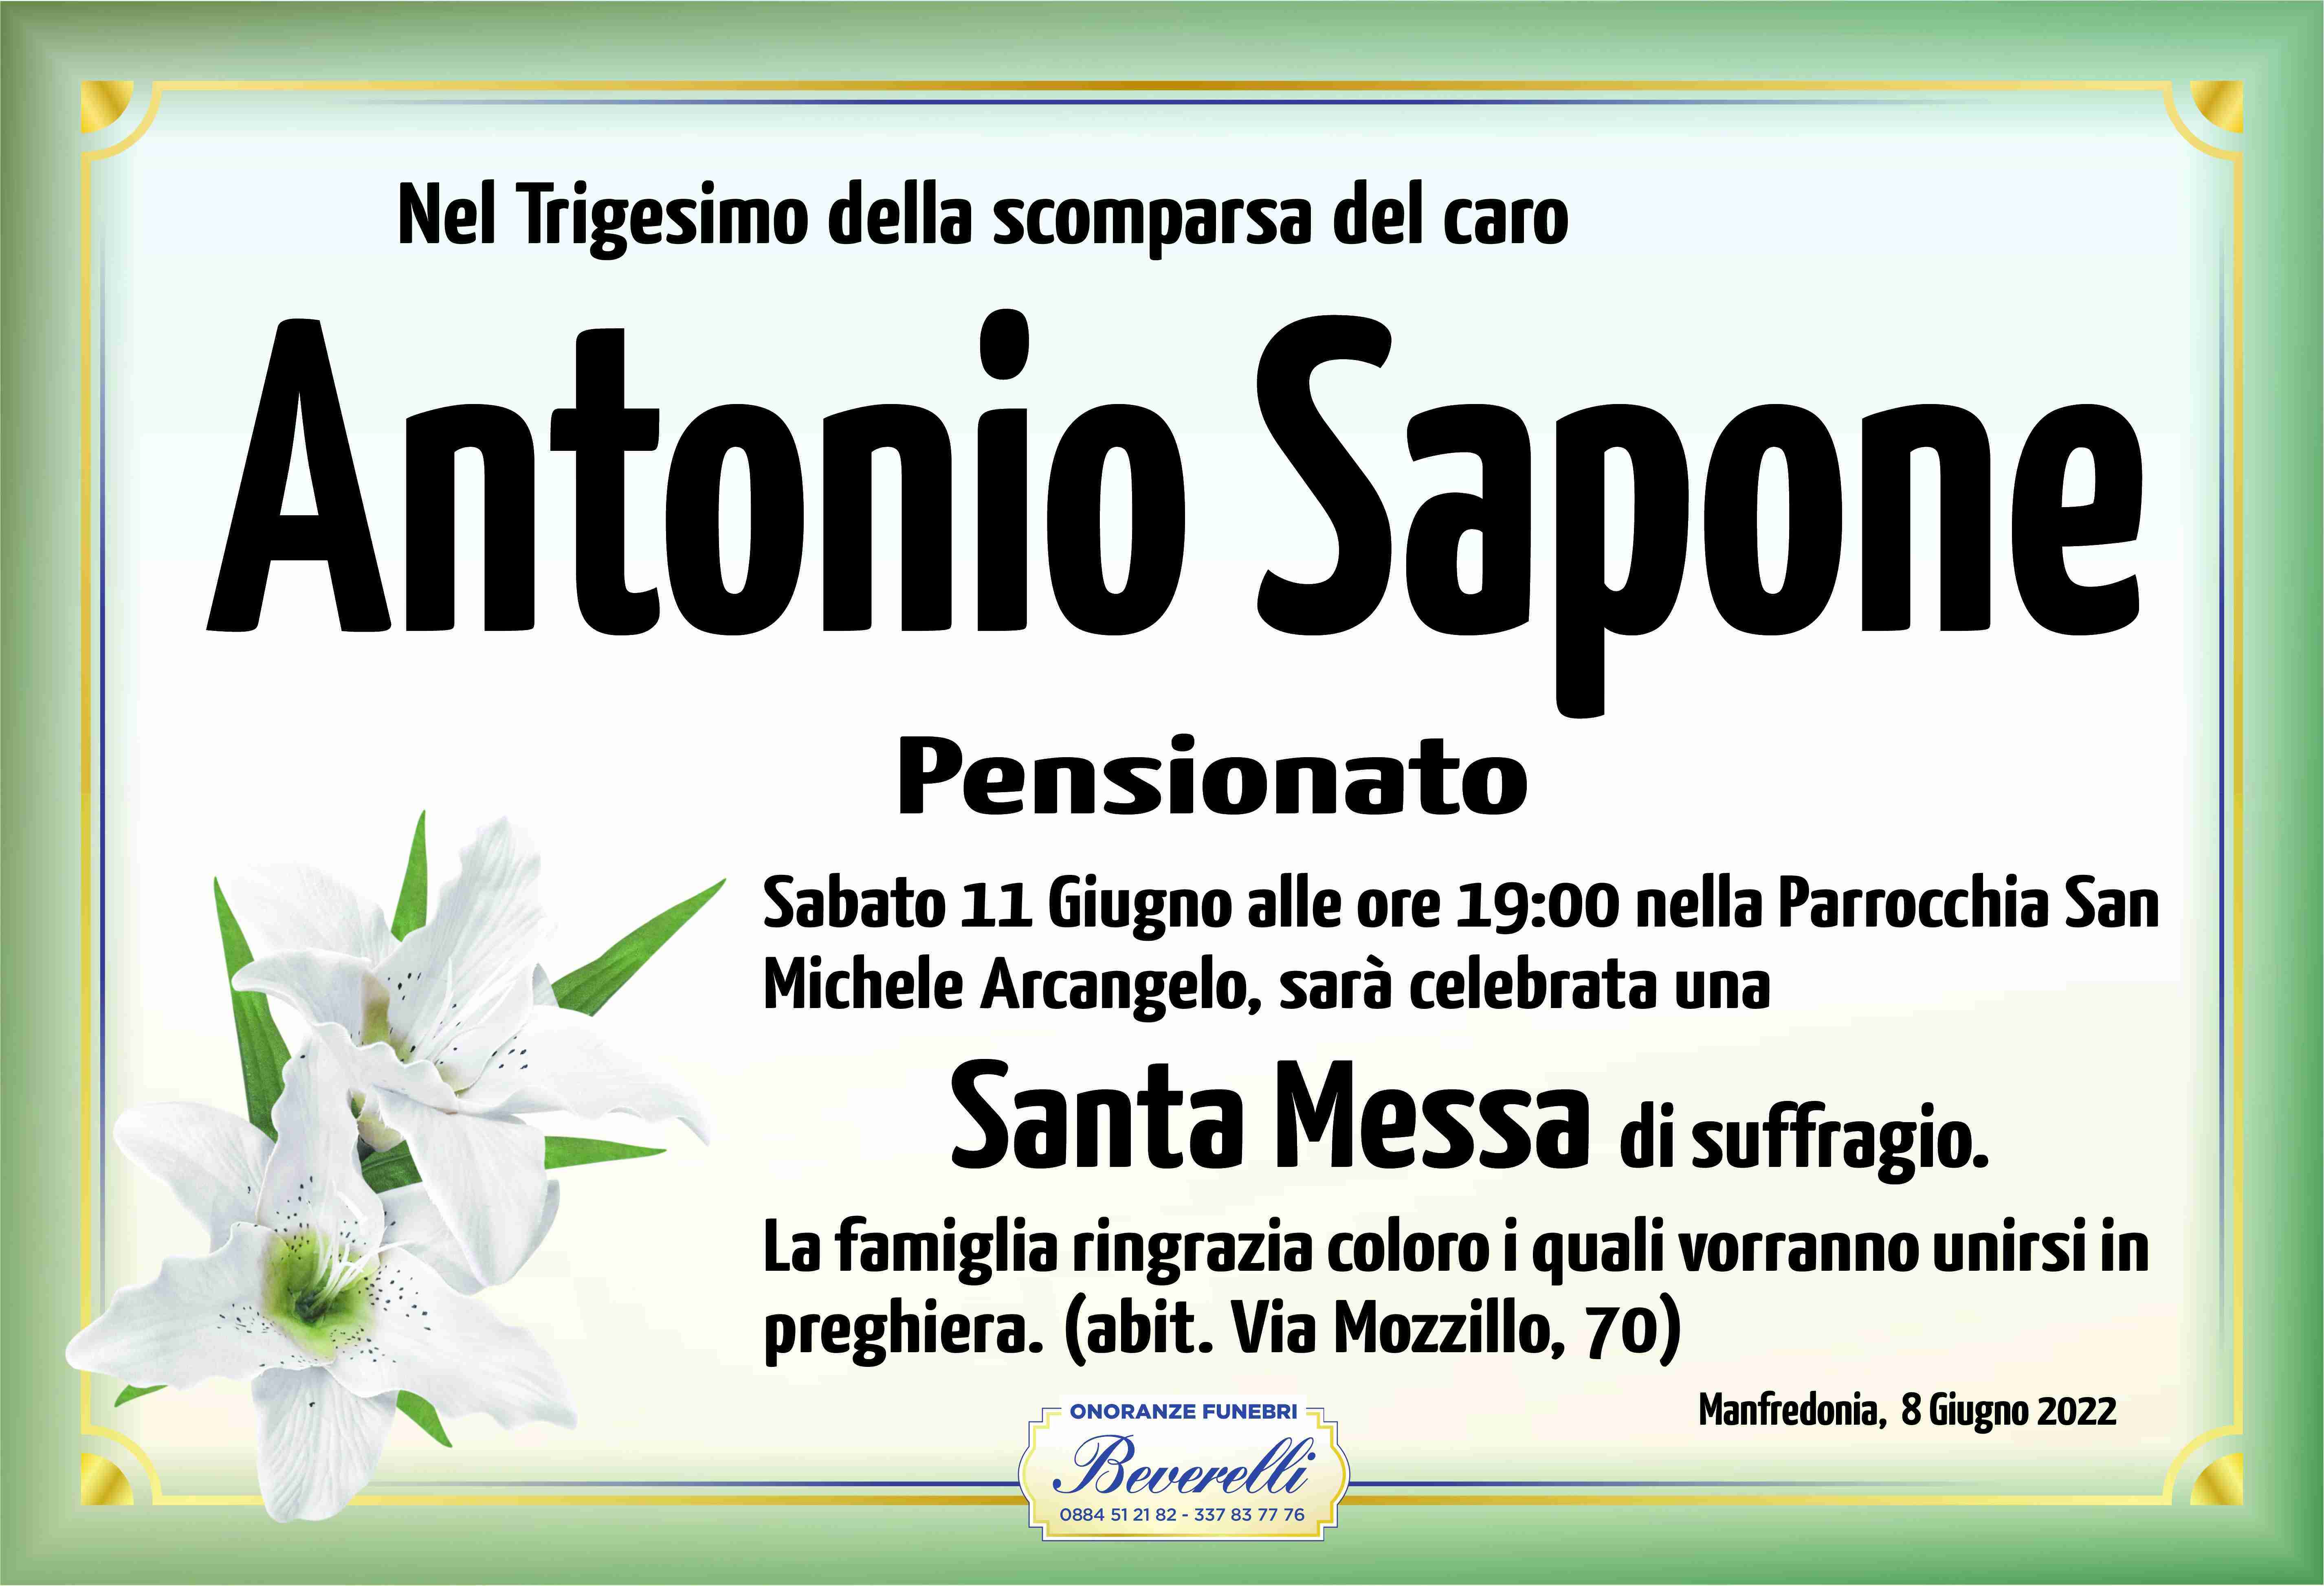 Antonio Sapone